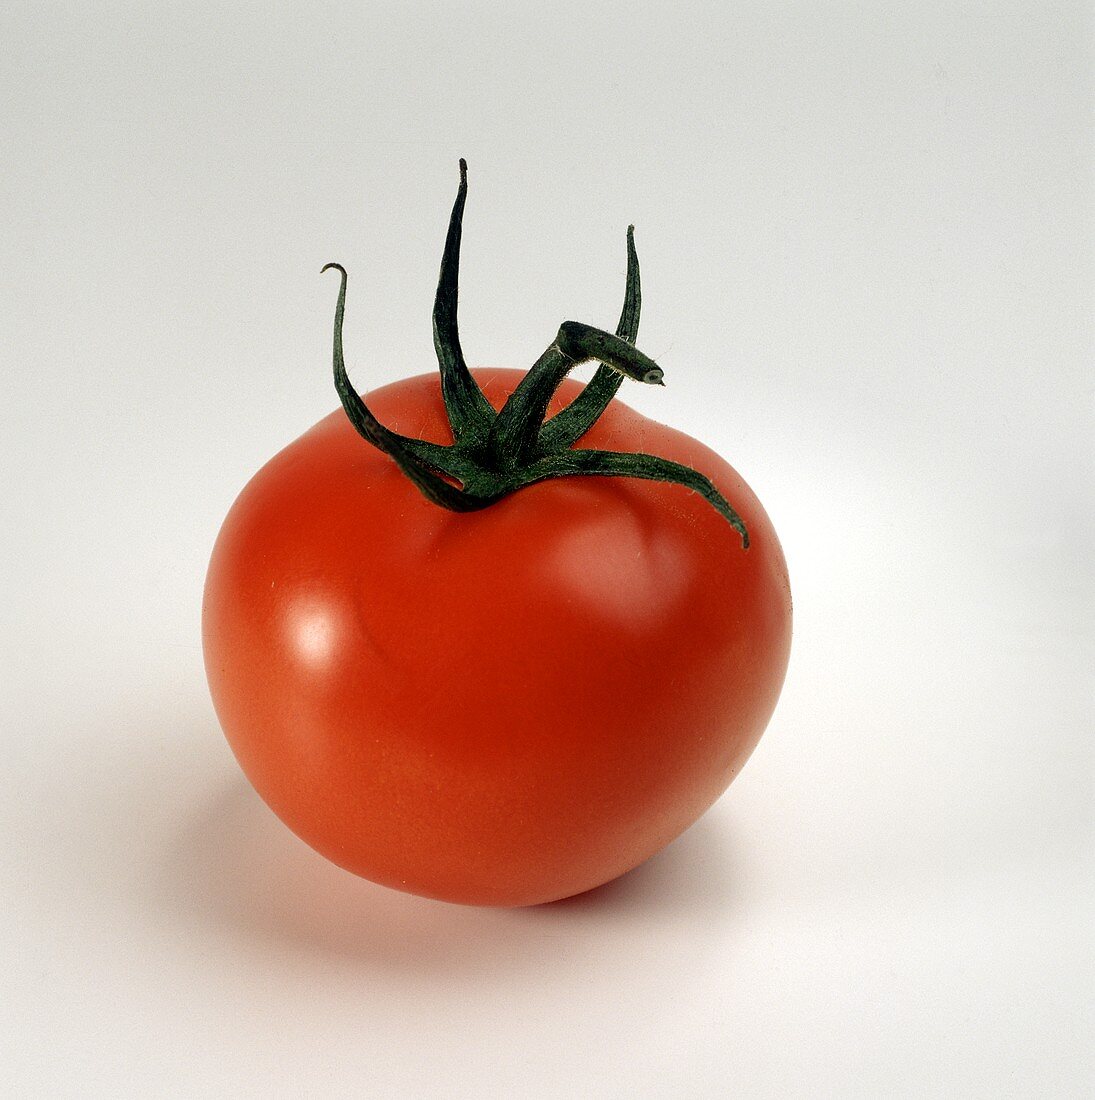 A tomato on light background